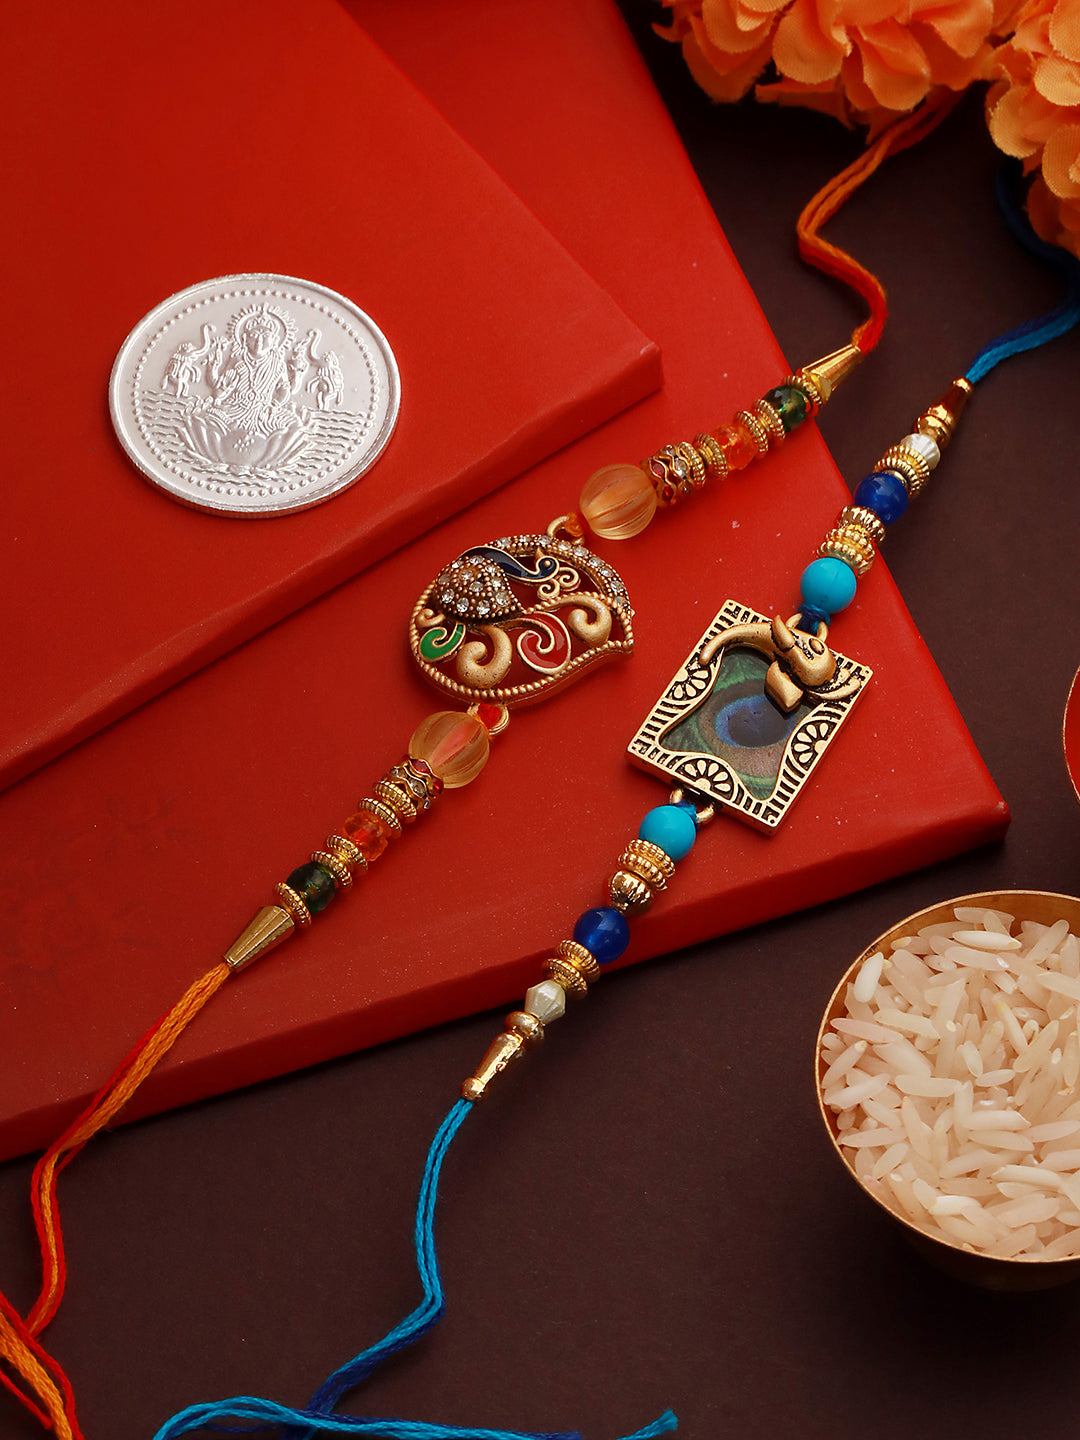 Set of 2 Kundan Studded Peacock Shaped Rakhi with 10 gram Laxmi Ganesh round 999 Round Silver Coin